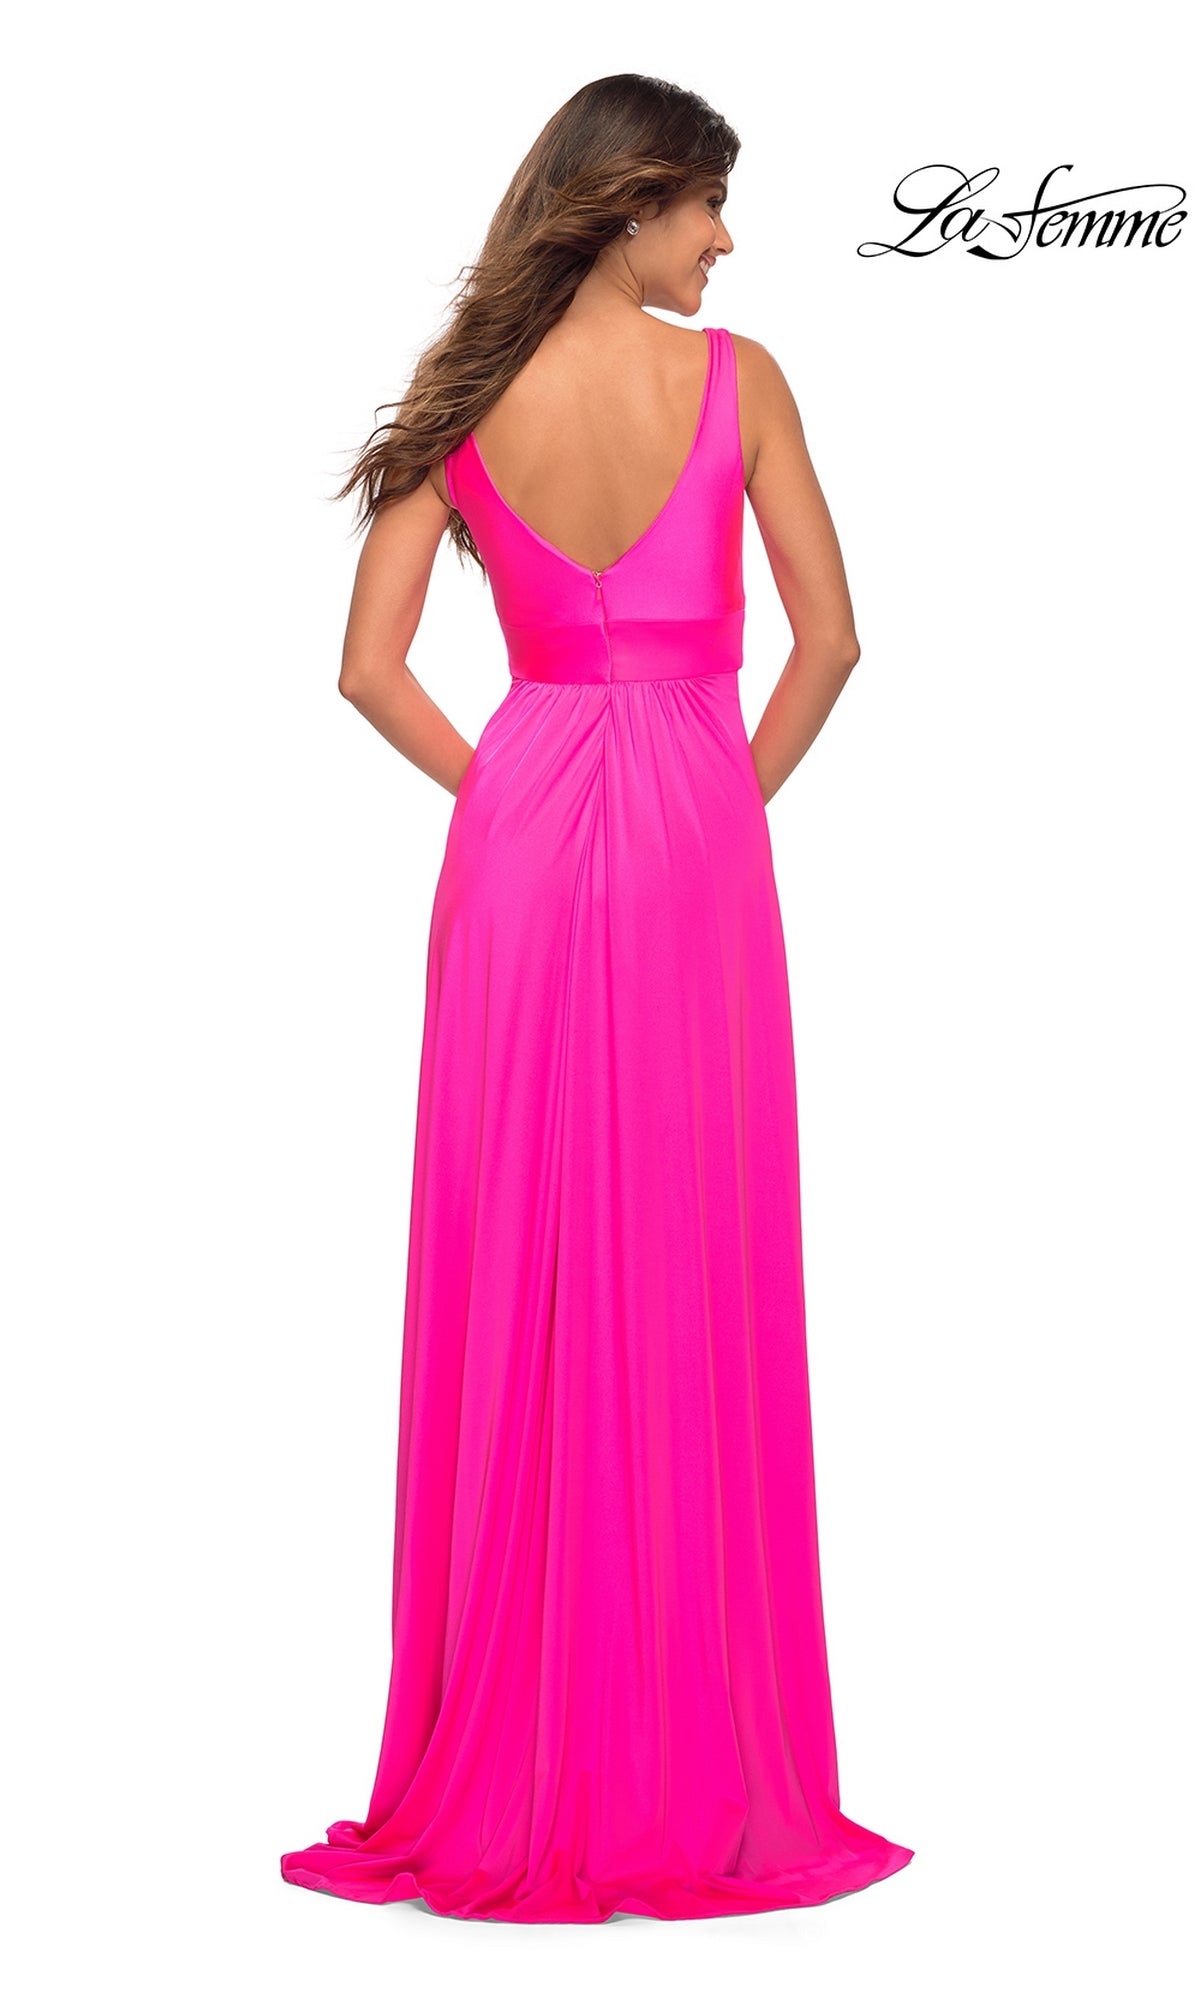  La Femme 30669 Formal Prom Dress